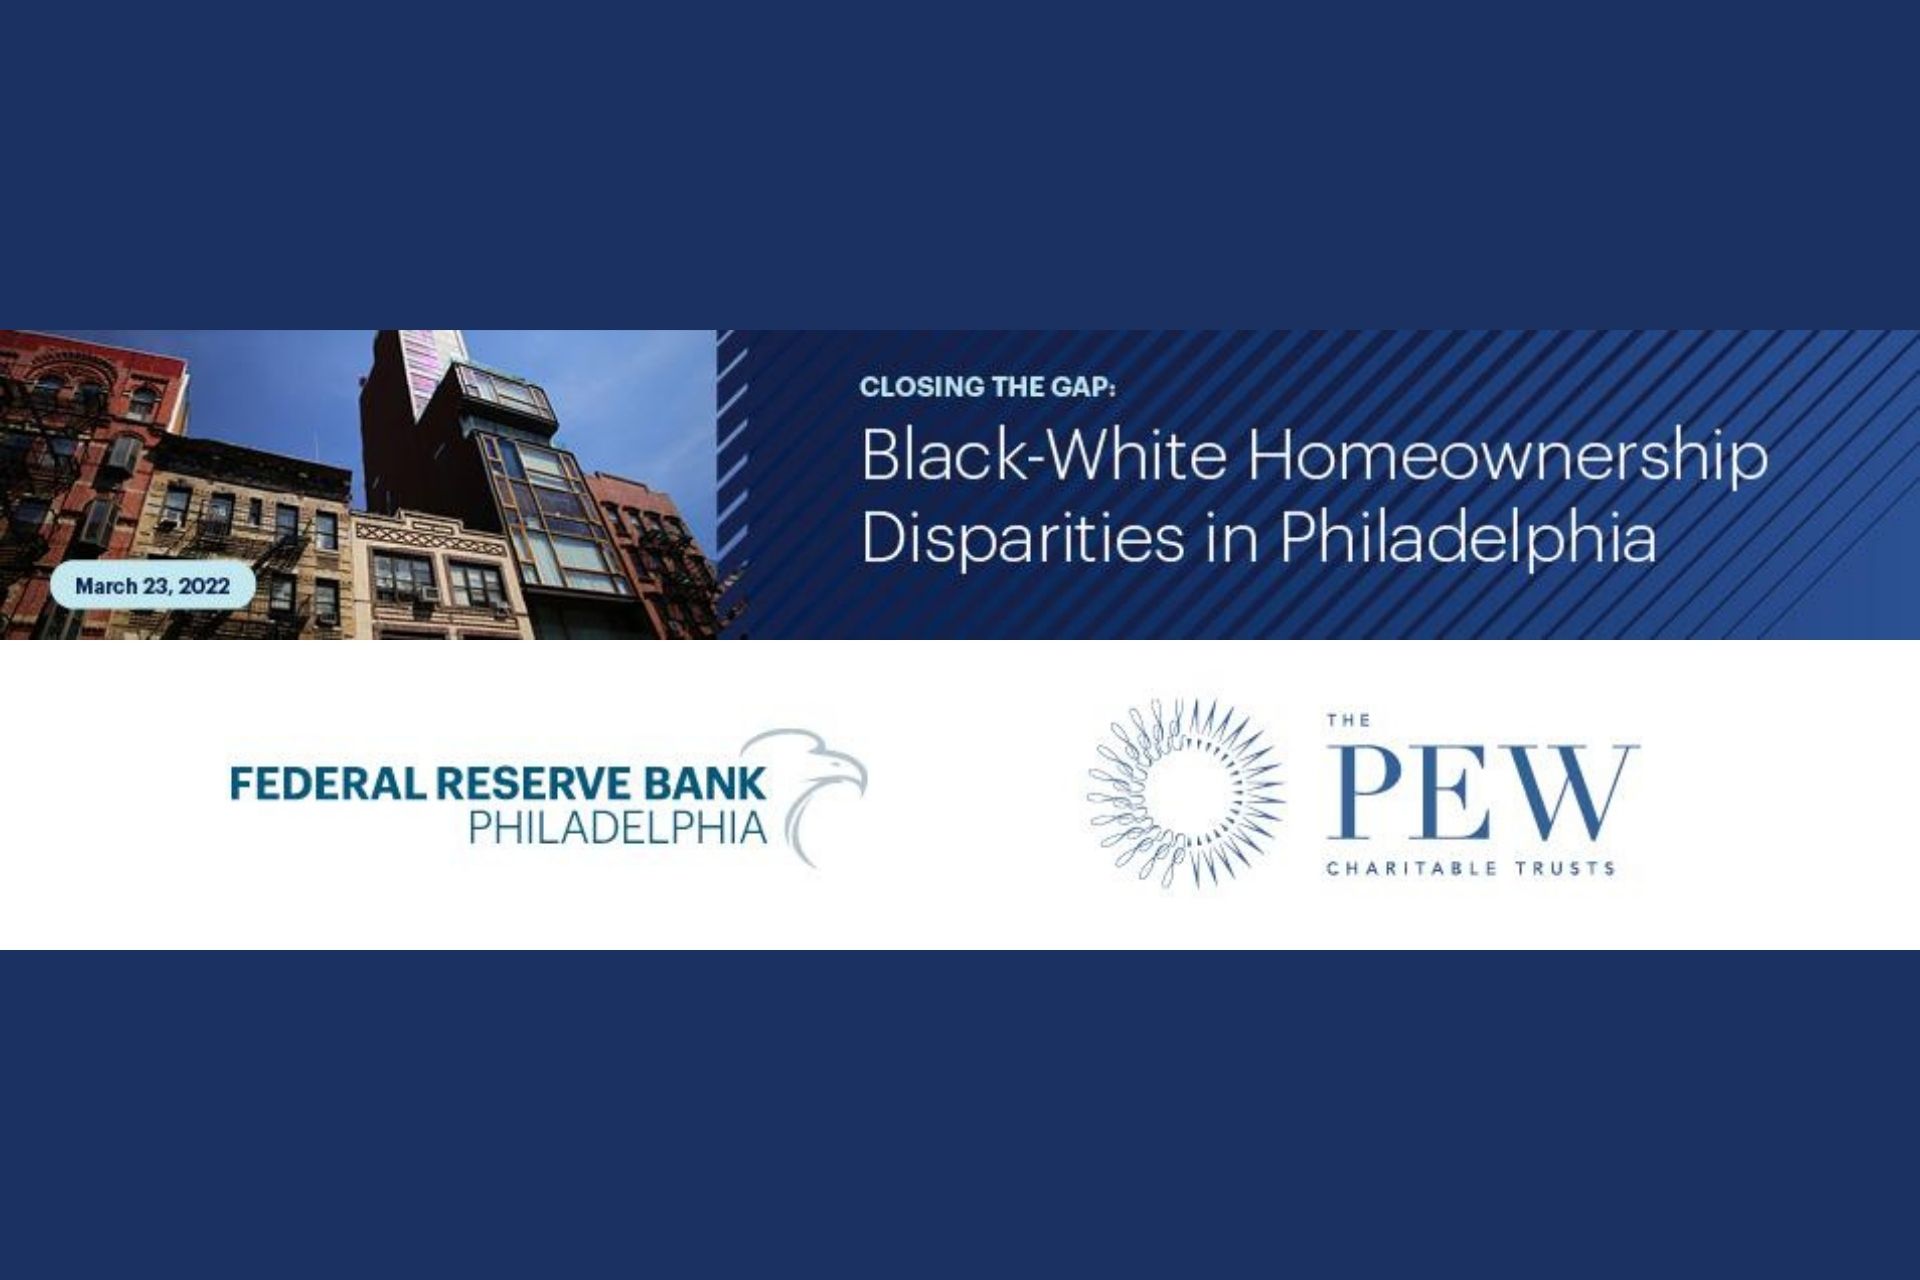 Black-White homeownership gap in Philadelphia